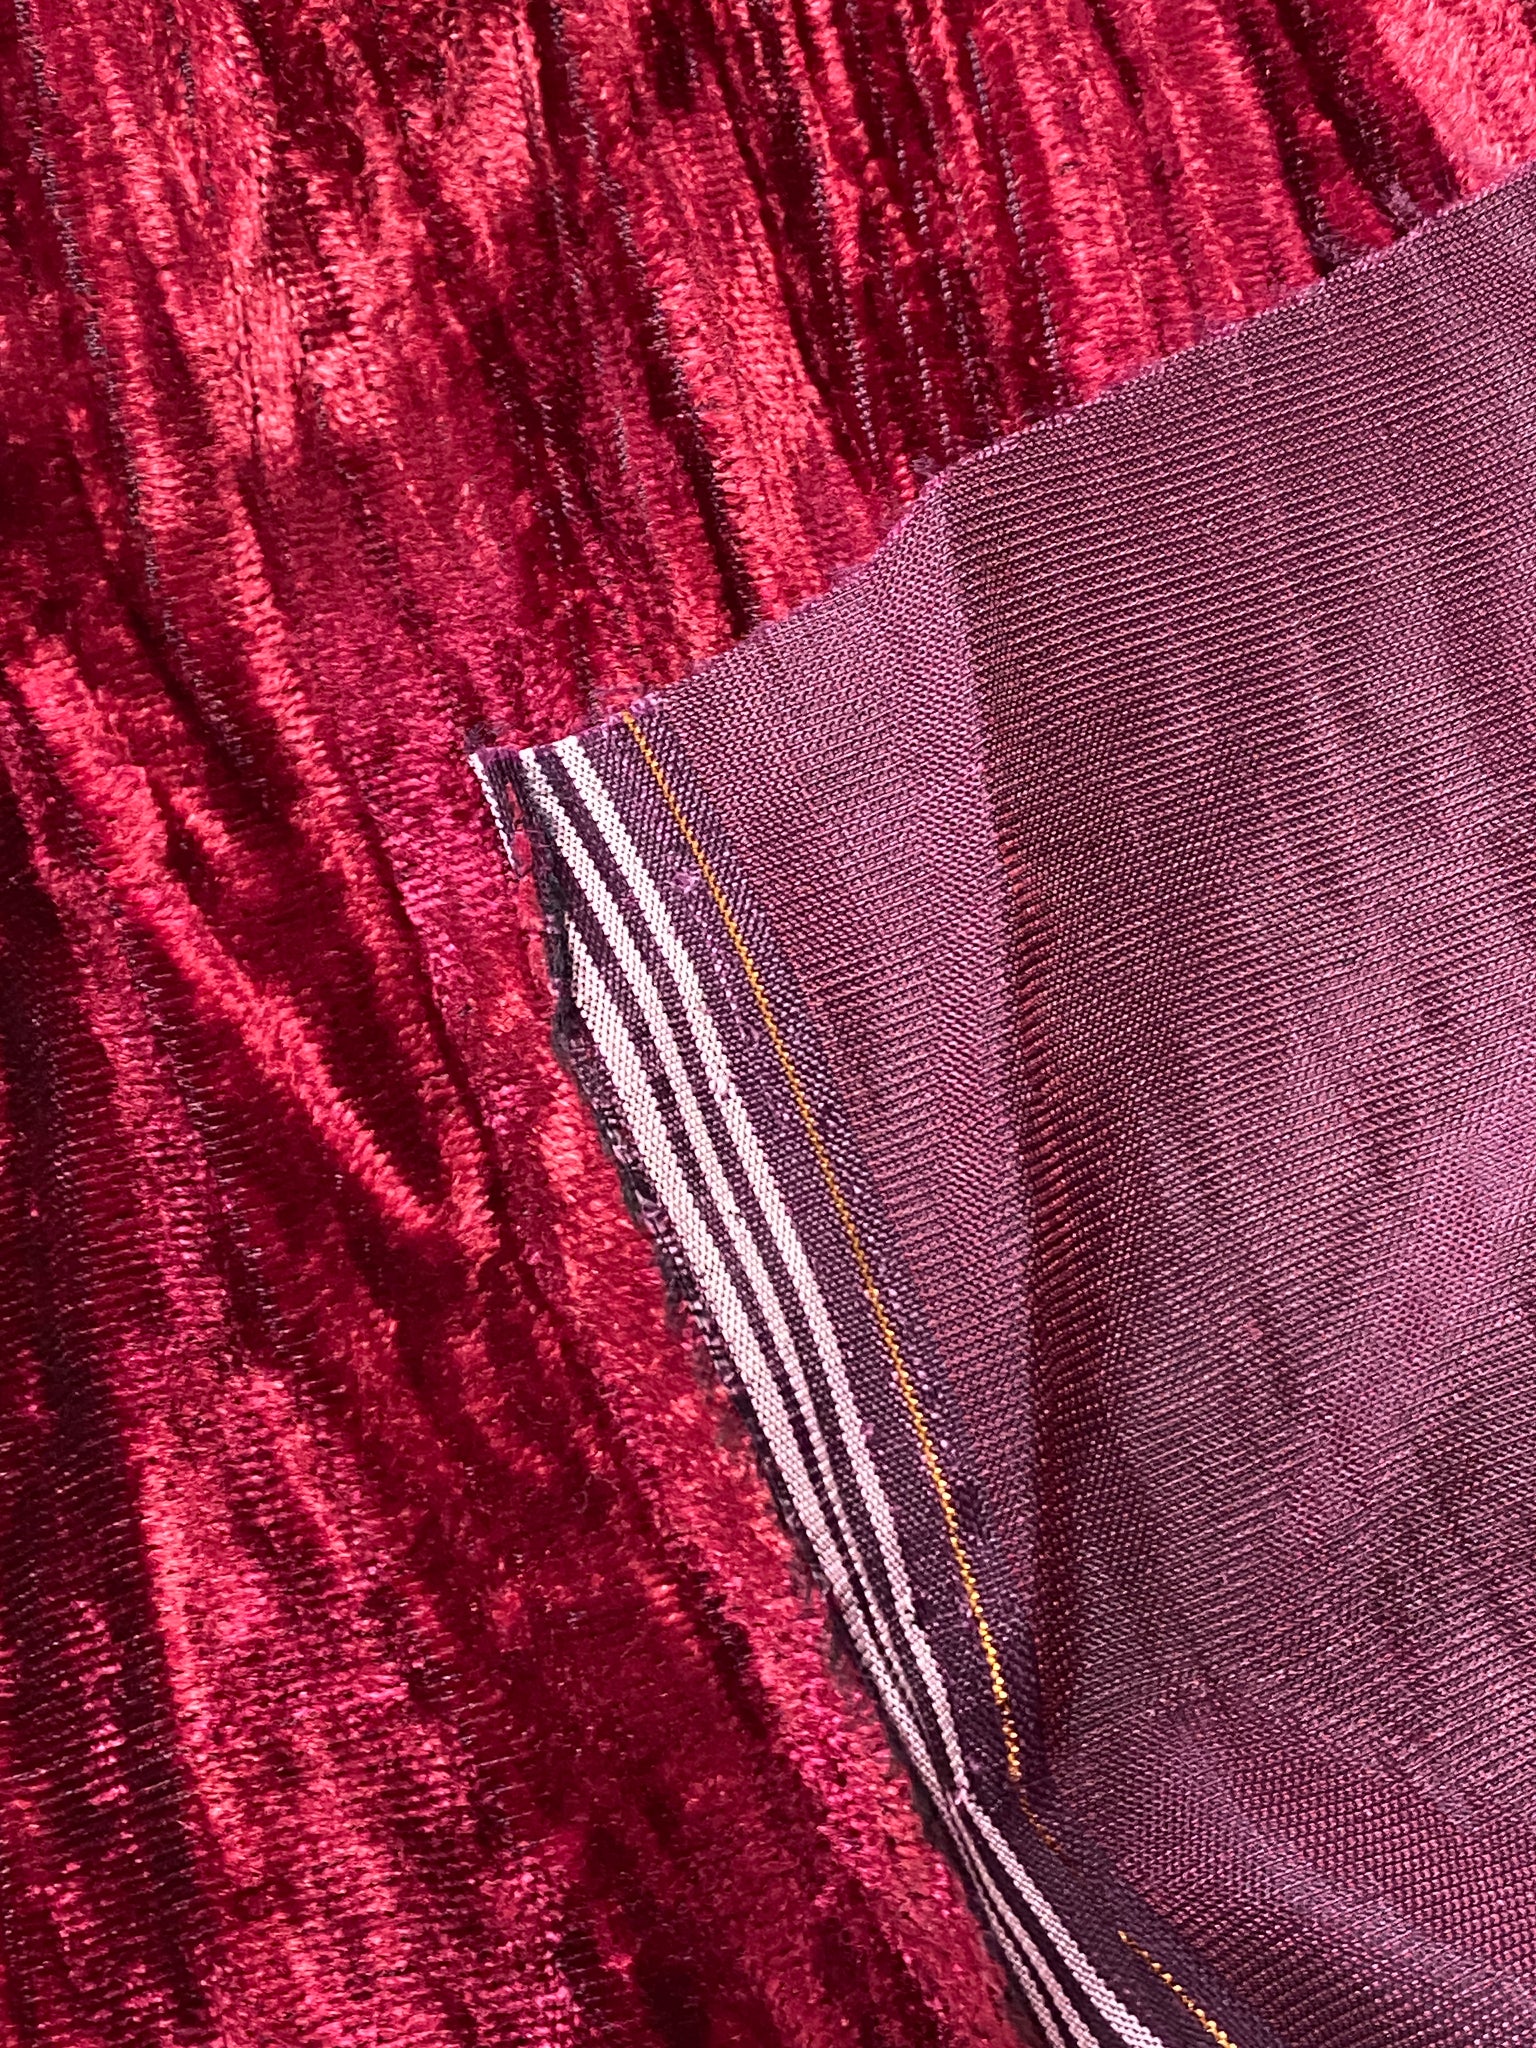 Ruby Red Vintage Crushed Velvet Fabric One piece 3+ yards –  originalwoolydragon